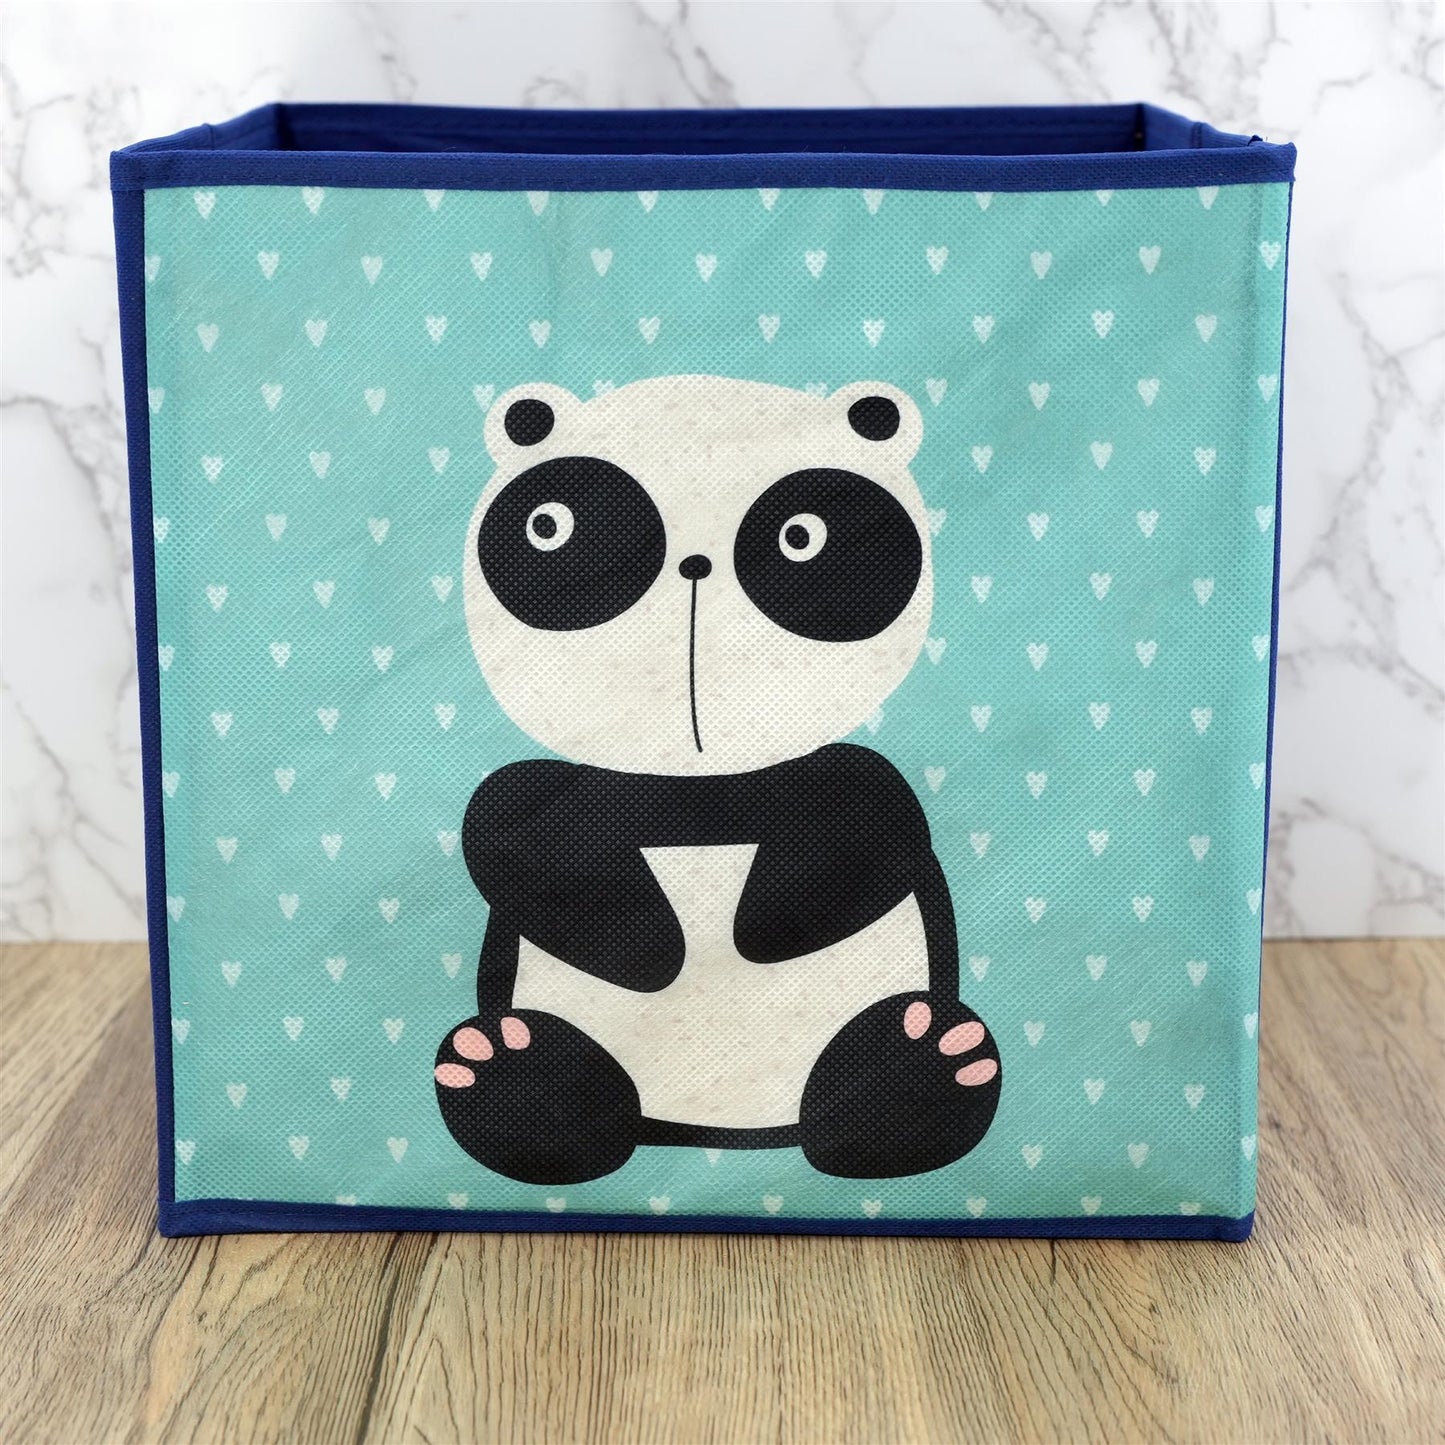 Panda Design Foldable Storage Box by The Magic Toy Shop - UKBuyZone